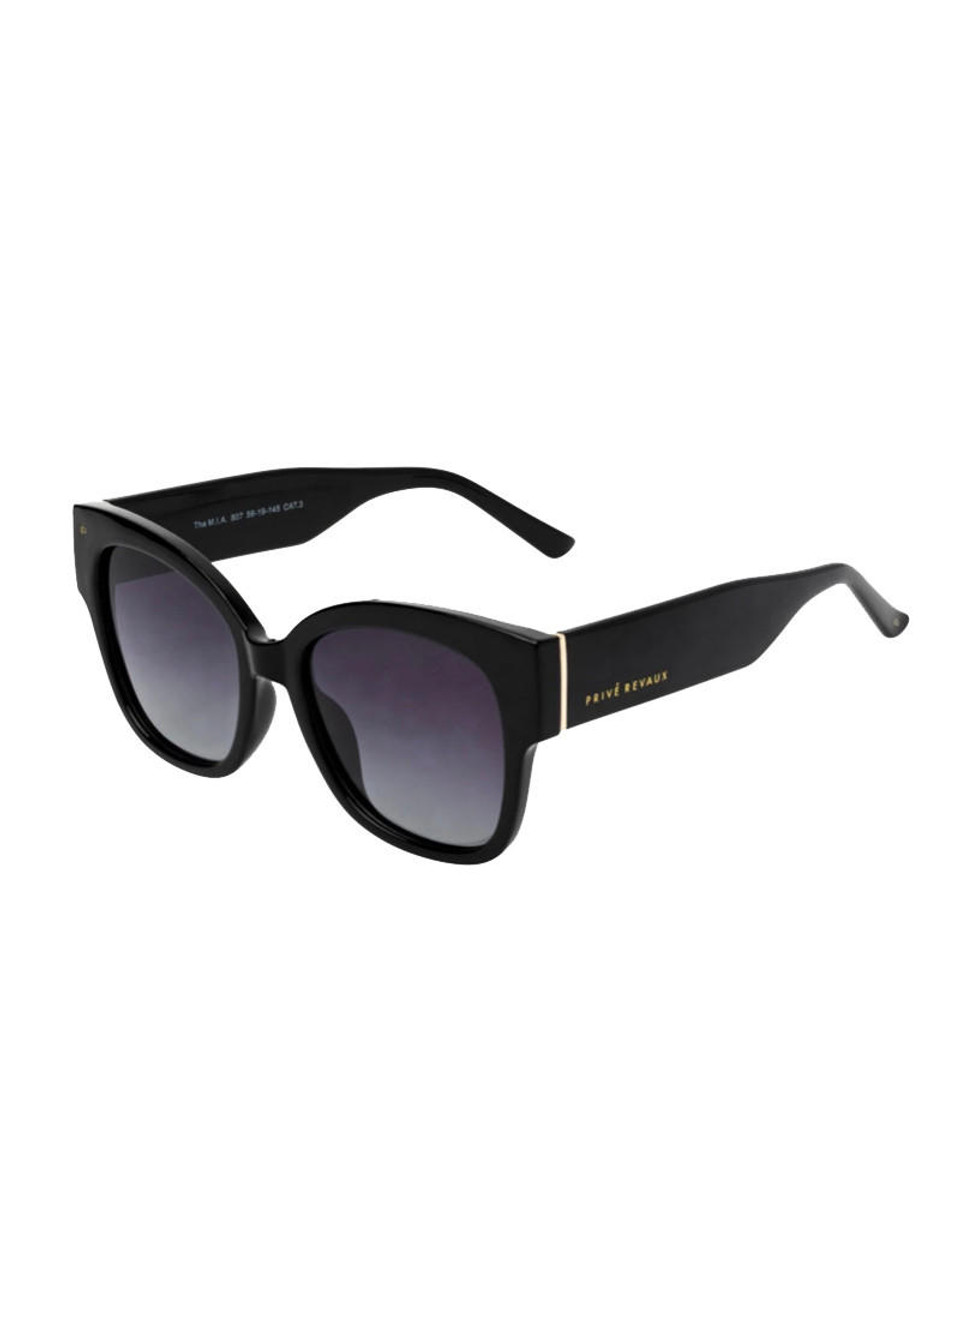 Prive Revaux Commando Sunglasses - Parallel Imported